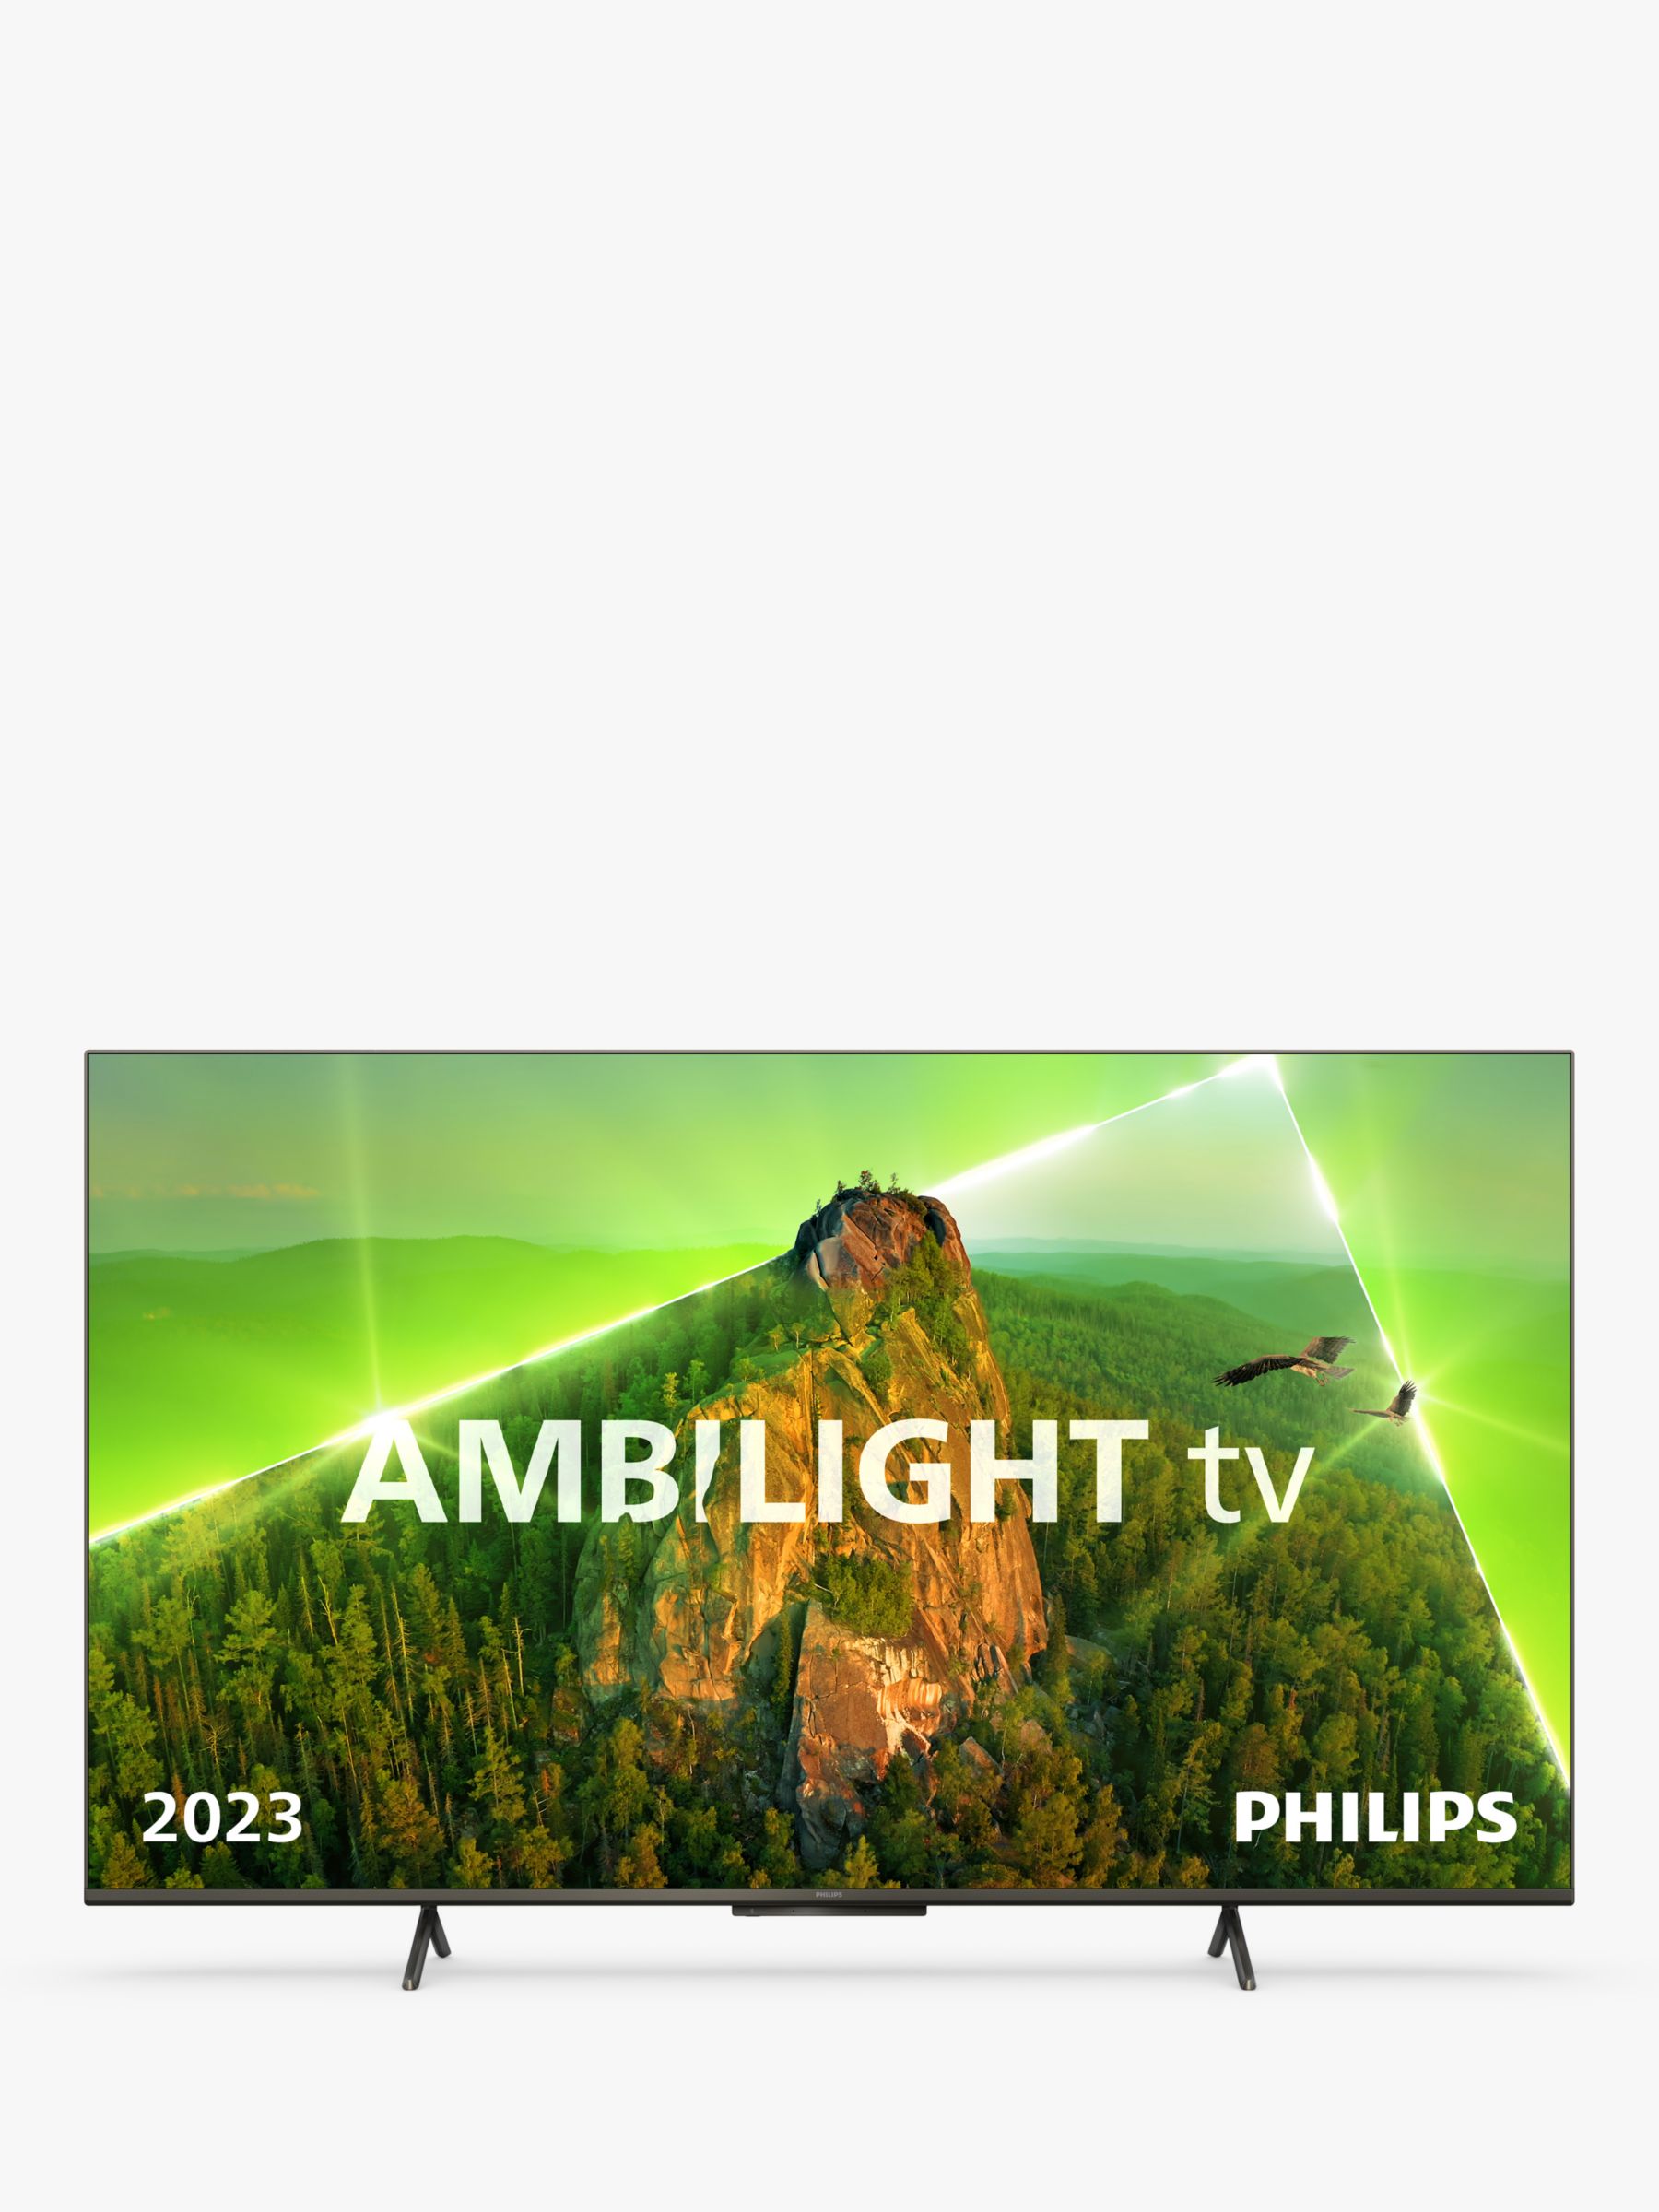 Philips 2023 Ambilight TVs will drop a key immersive visual